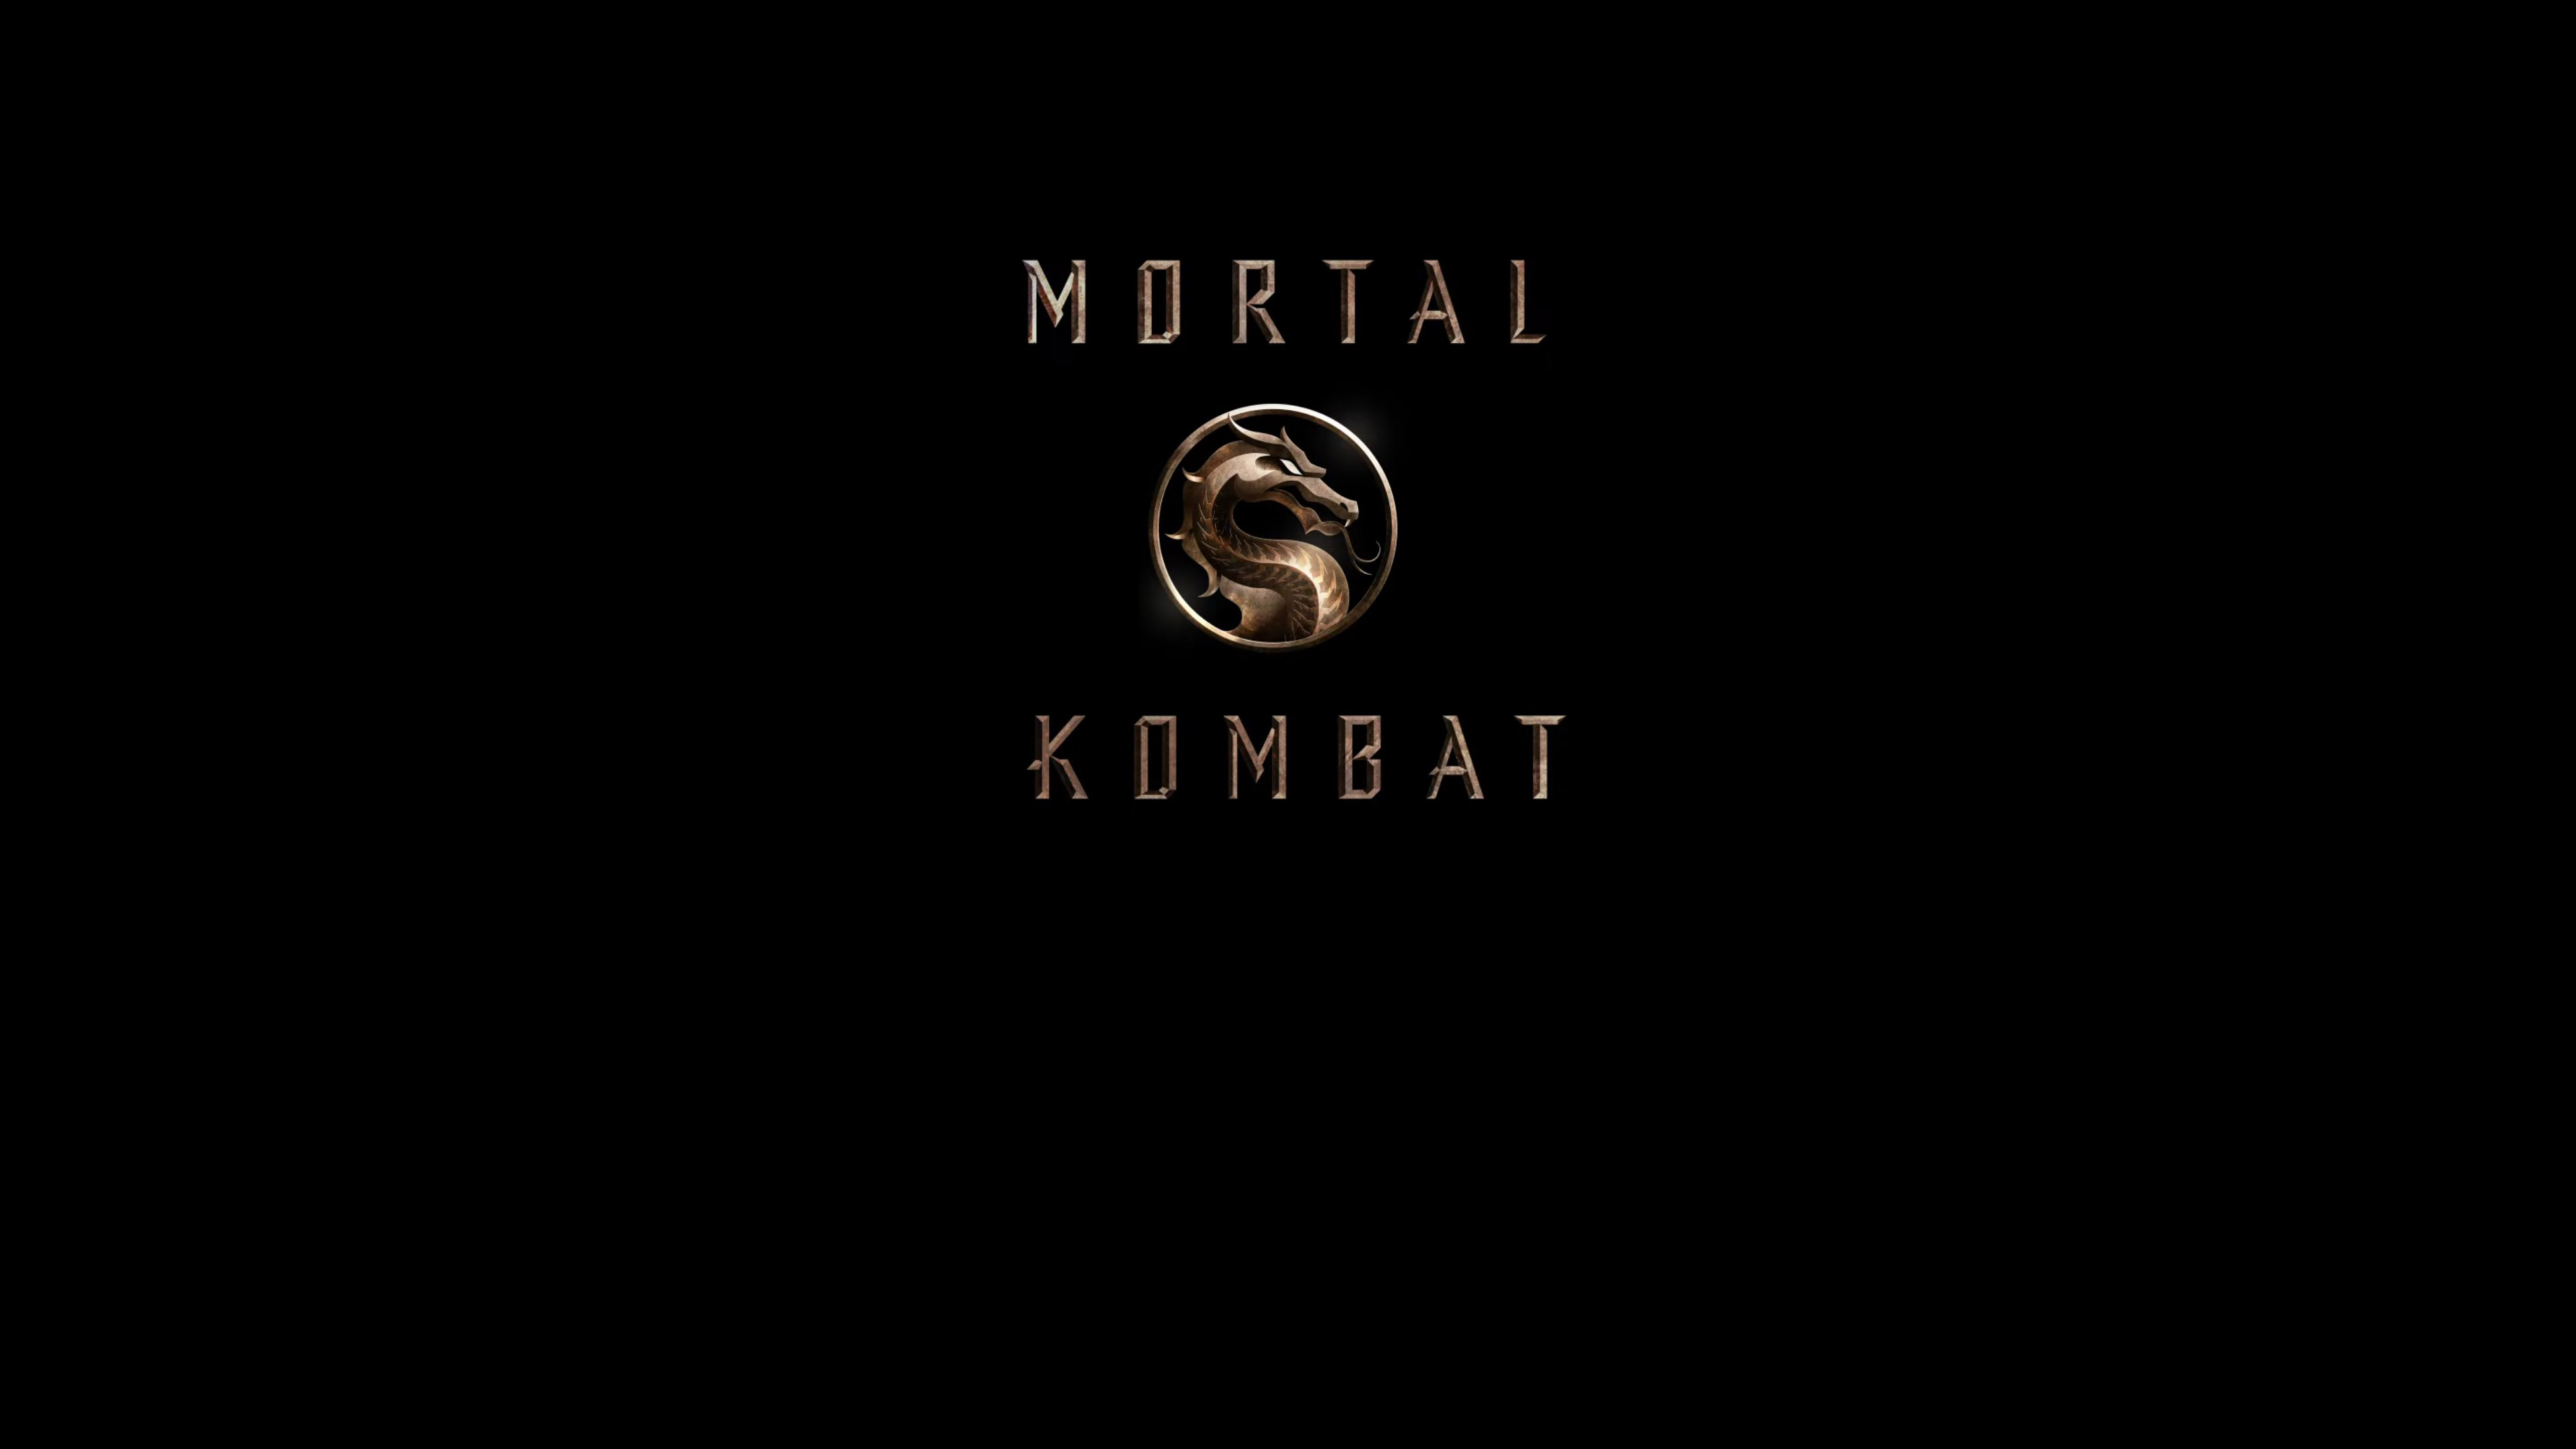 Movie Mortal Kombat (2021) HD Wallpaper | Background Image